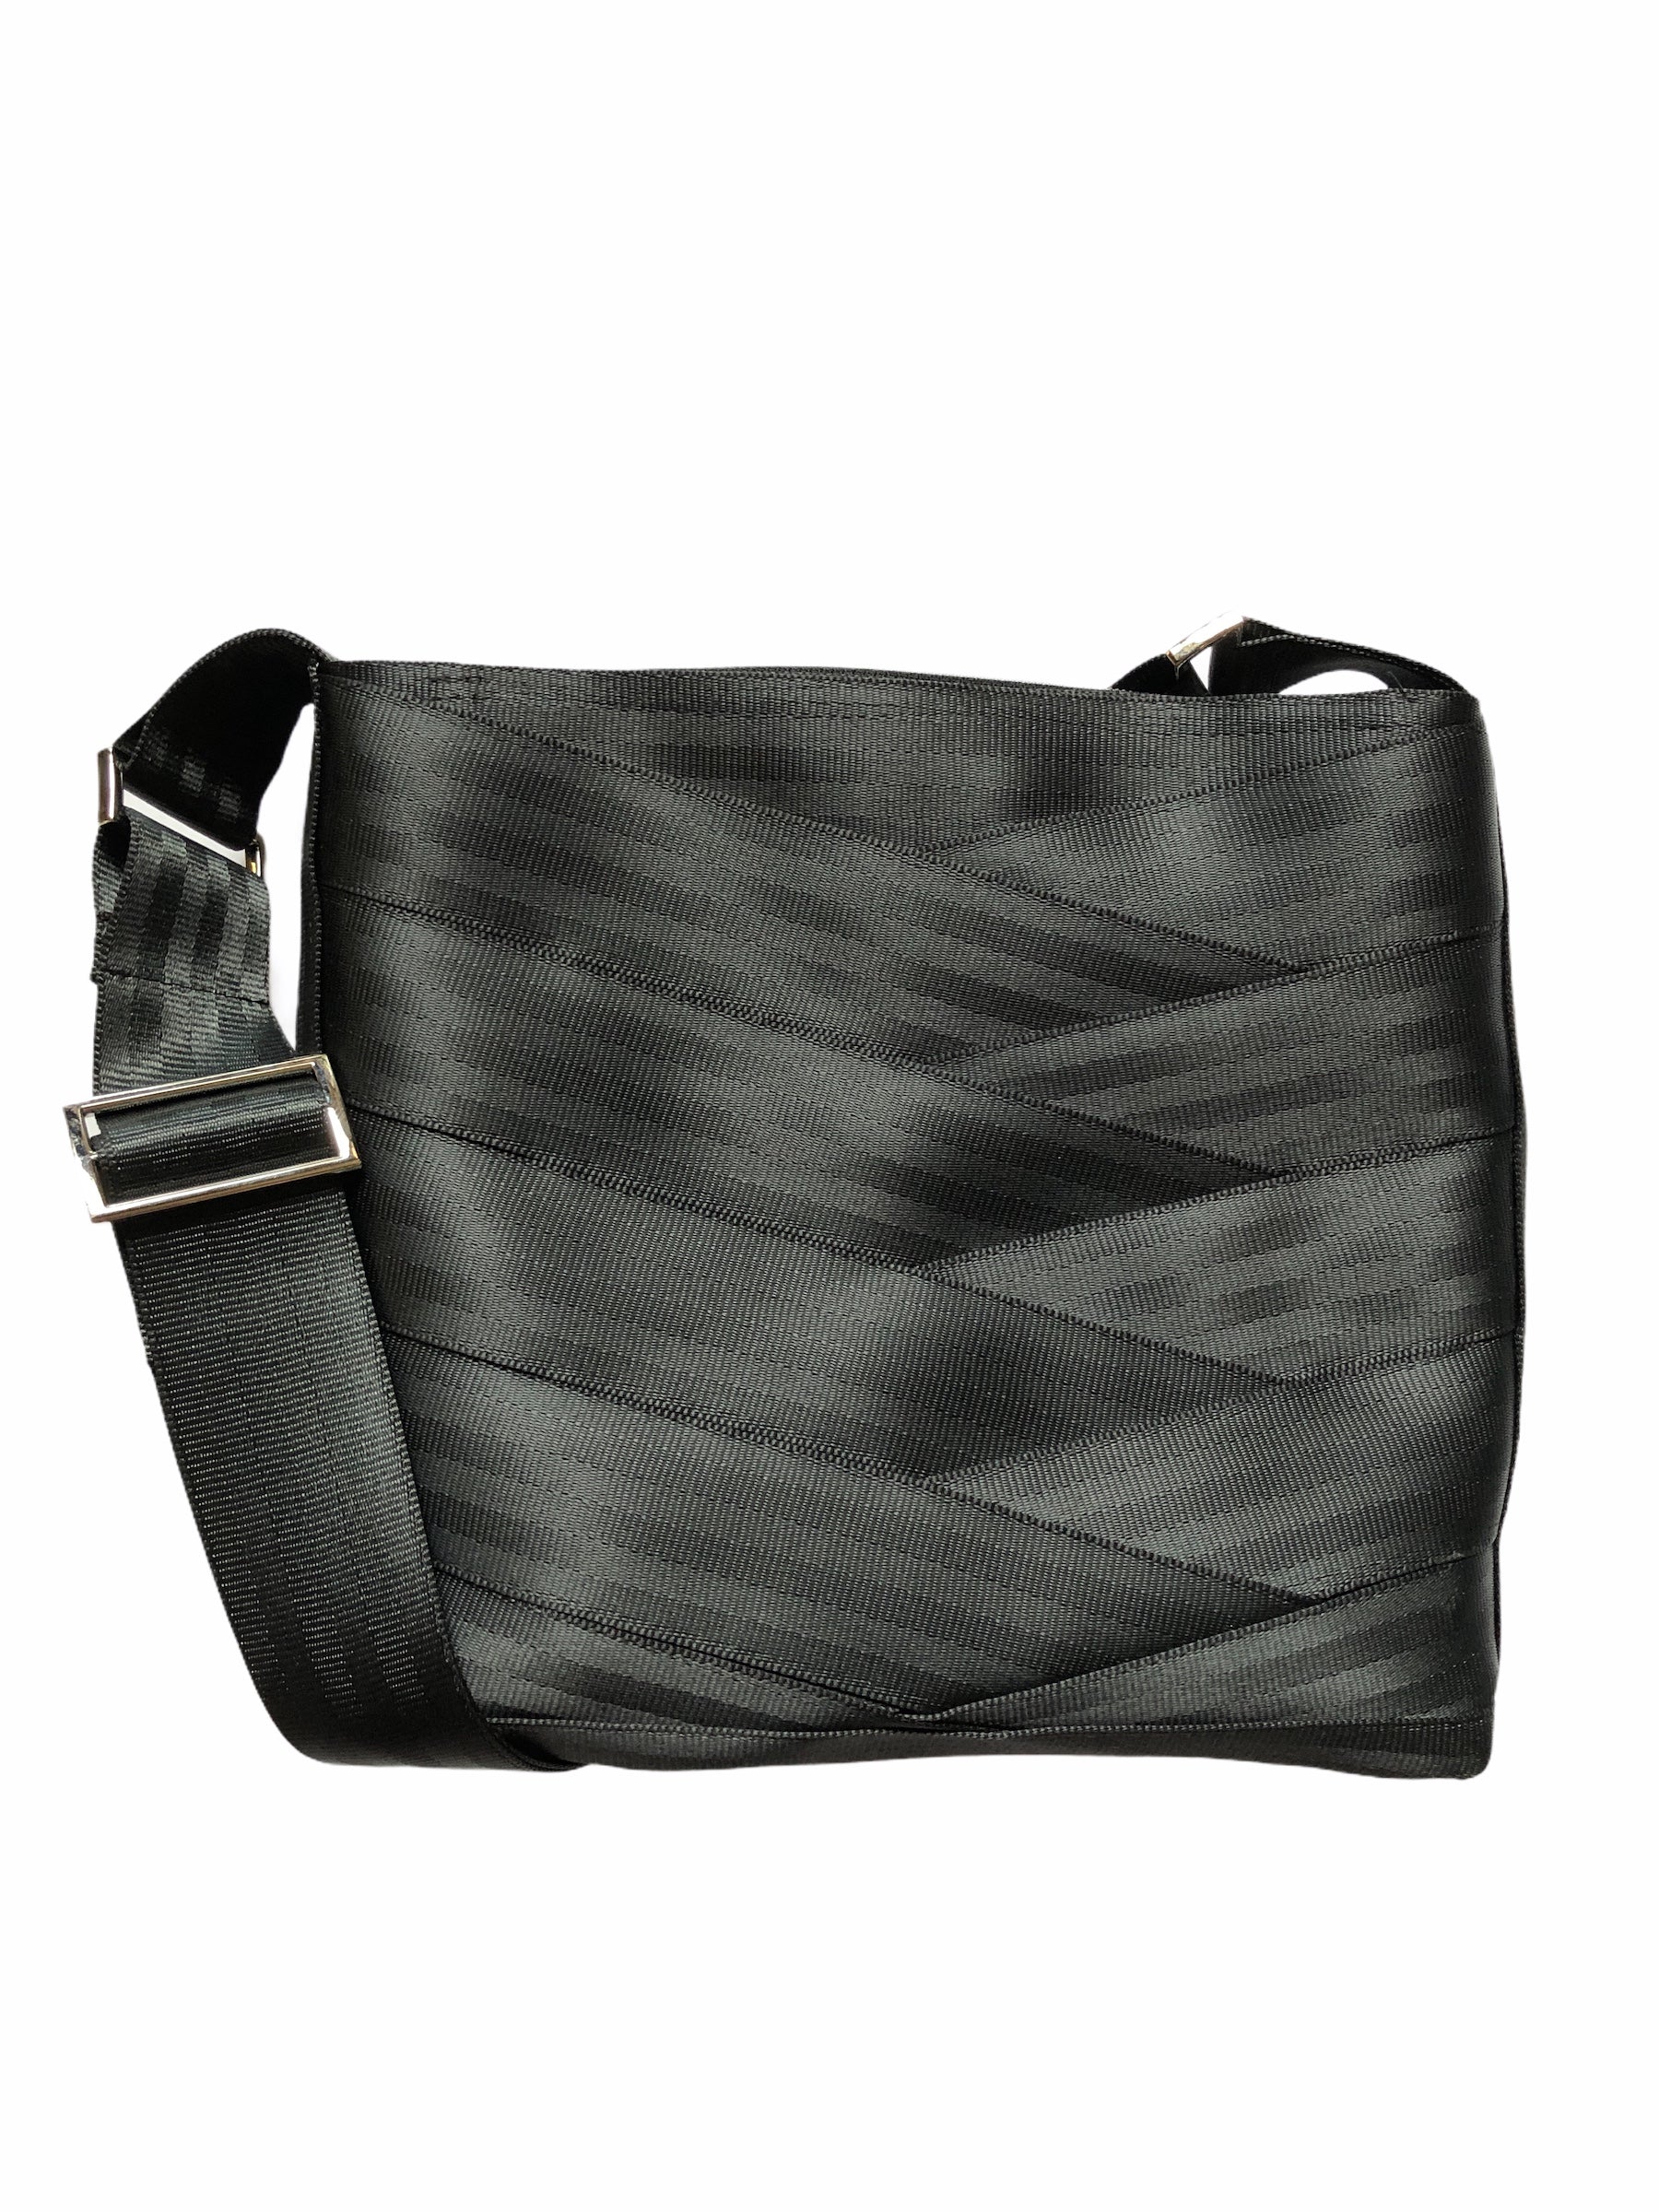 Pure Detroit OFFICIAL - Large City Slinger Tote Seatbelt Bag - Black PRE ORDER Seatbelt Bags   